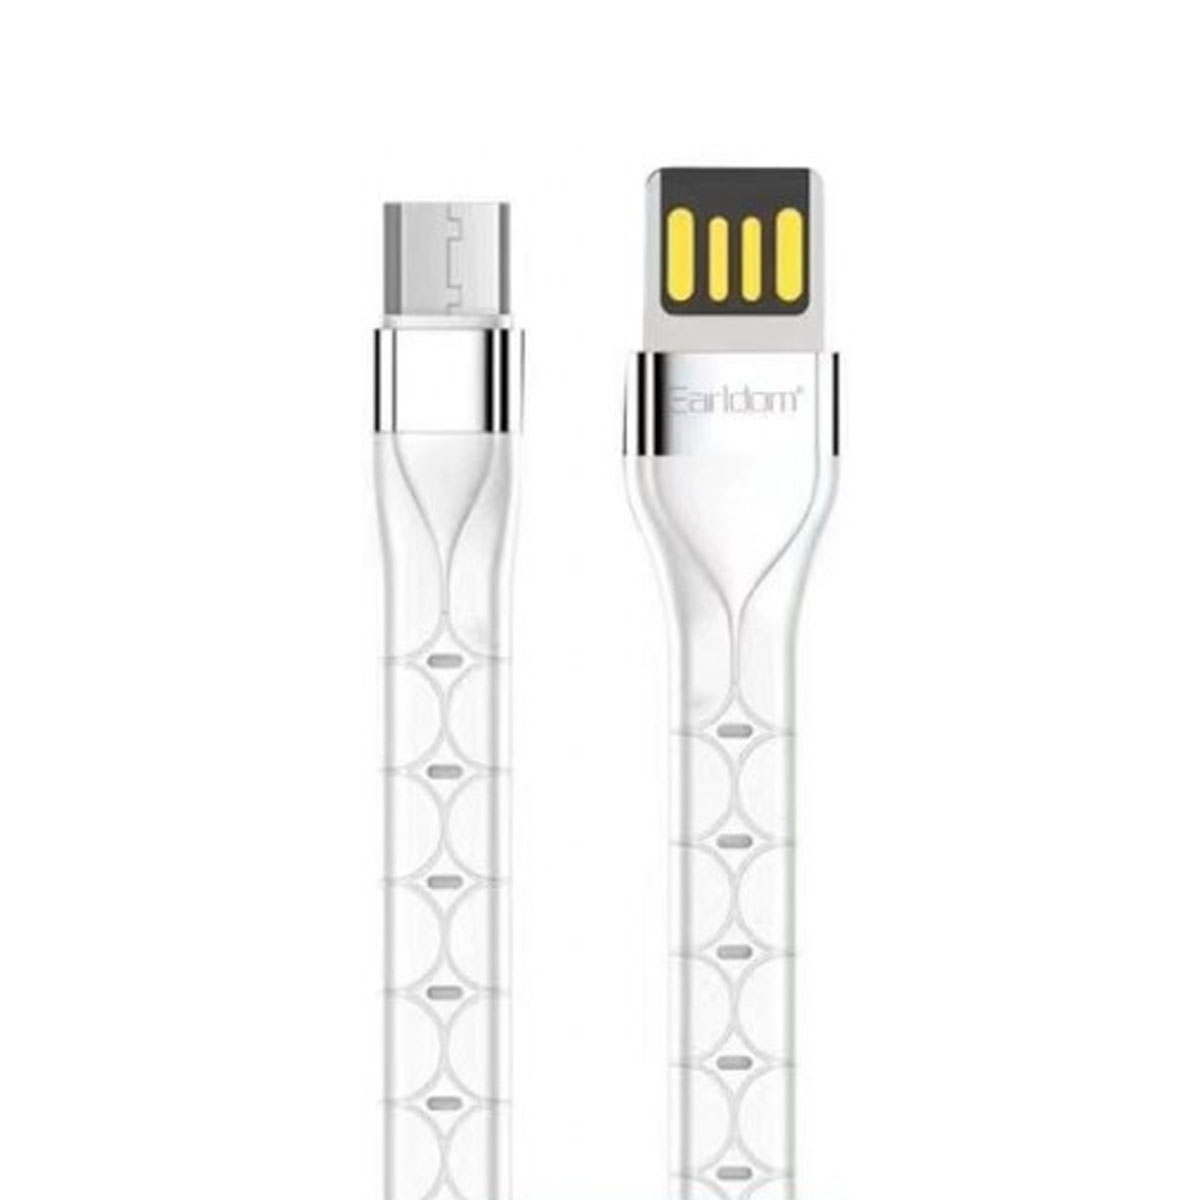 Кабель EARLDOM EC-123M Micro USB, 3A, длина 0.15 метра, цвет белый